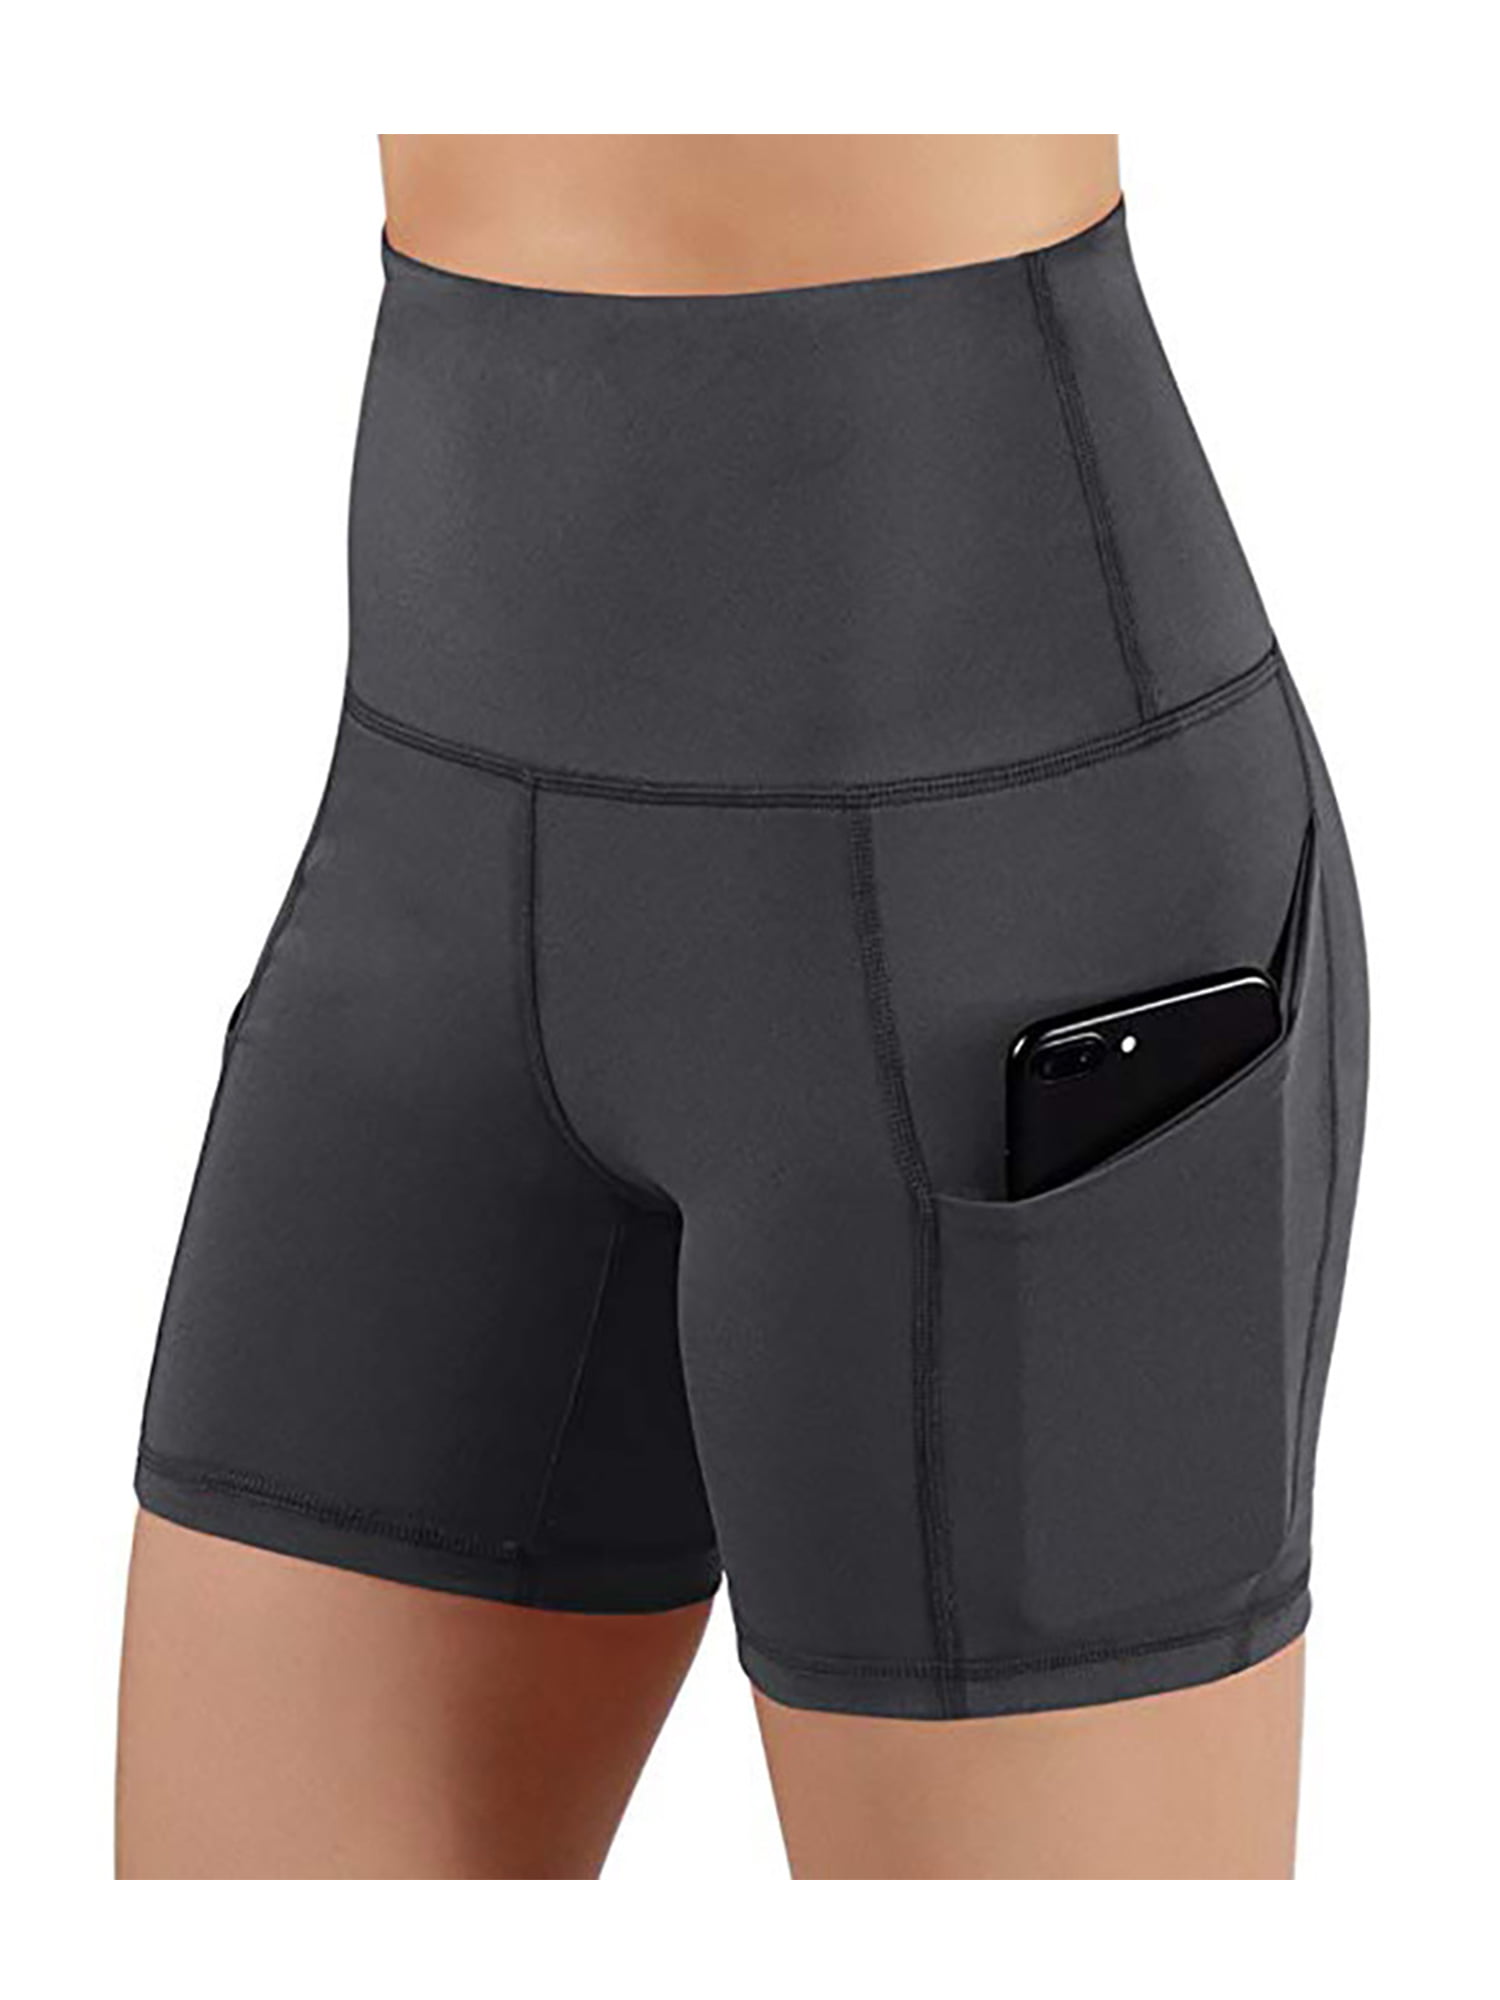 Shorts Glorxha High Waist Yoga Women Sport Tights Workout Athletic Biker Pants with Pocket